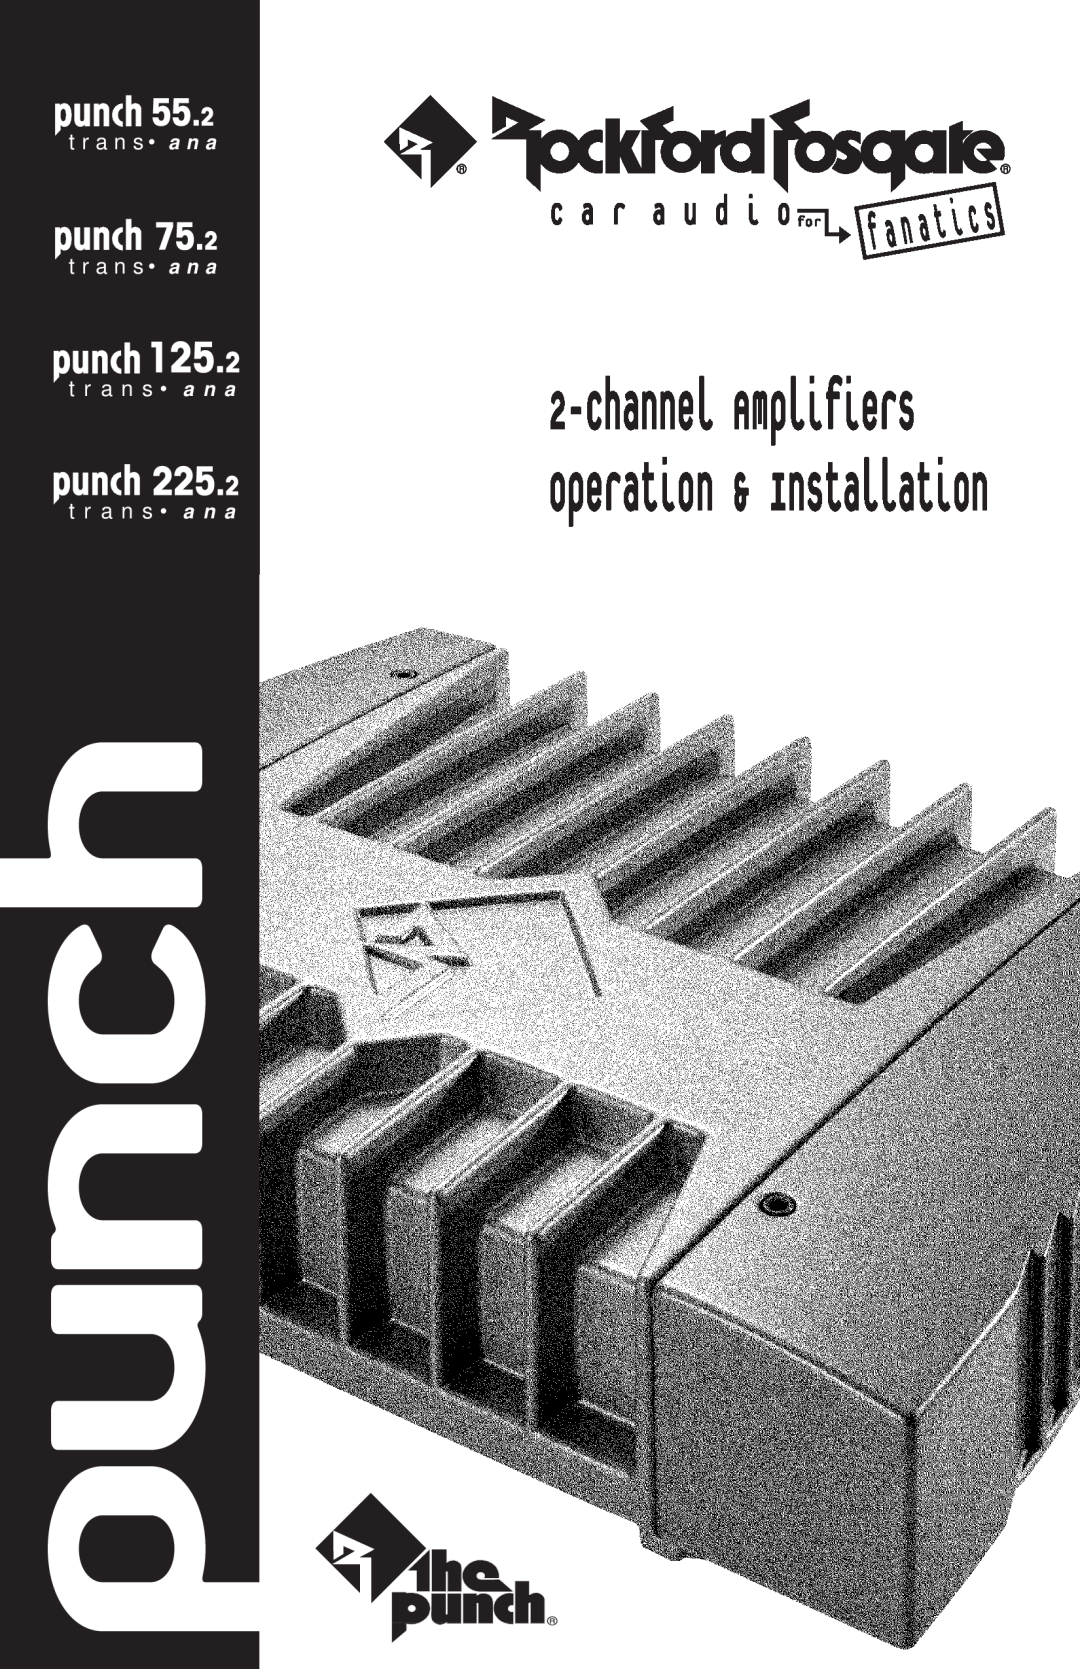 Rockford Fosgate 55.2, 75.2, 125.2, 225.2 manual punch, Channel Amplifiers Operation & Installation 